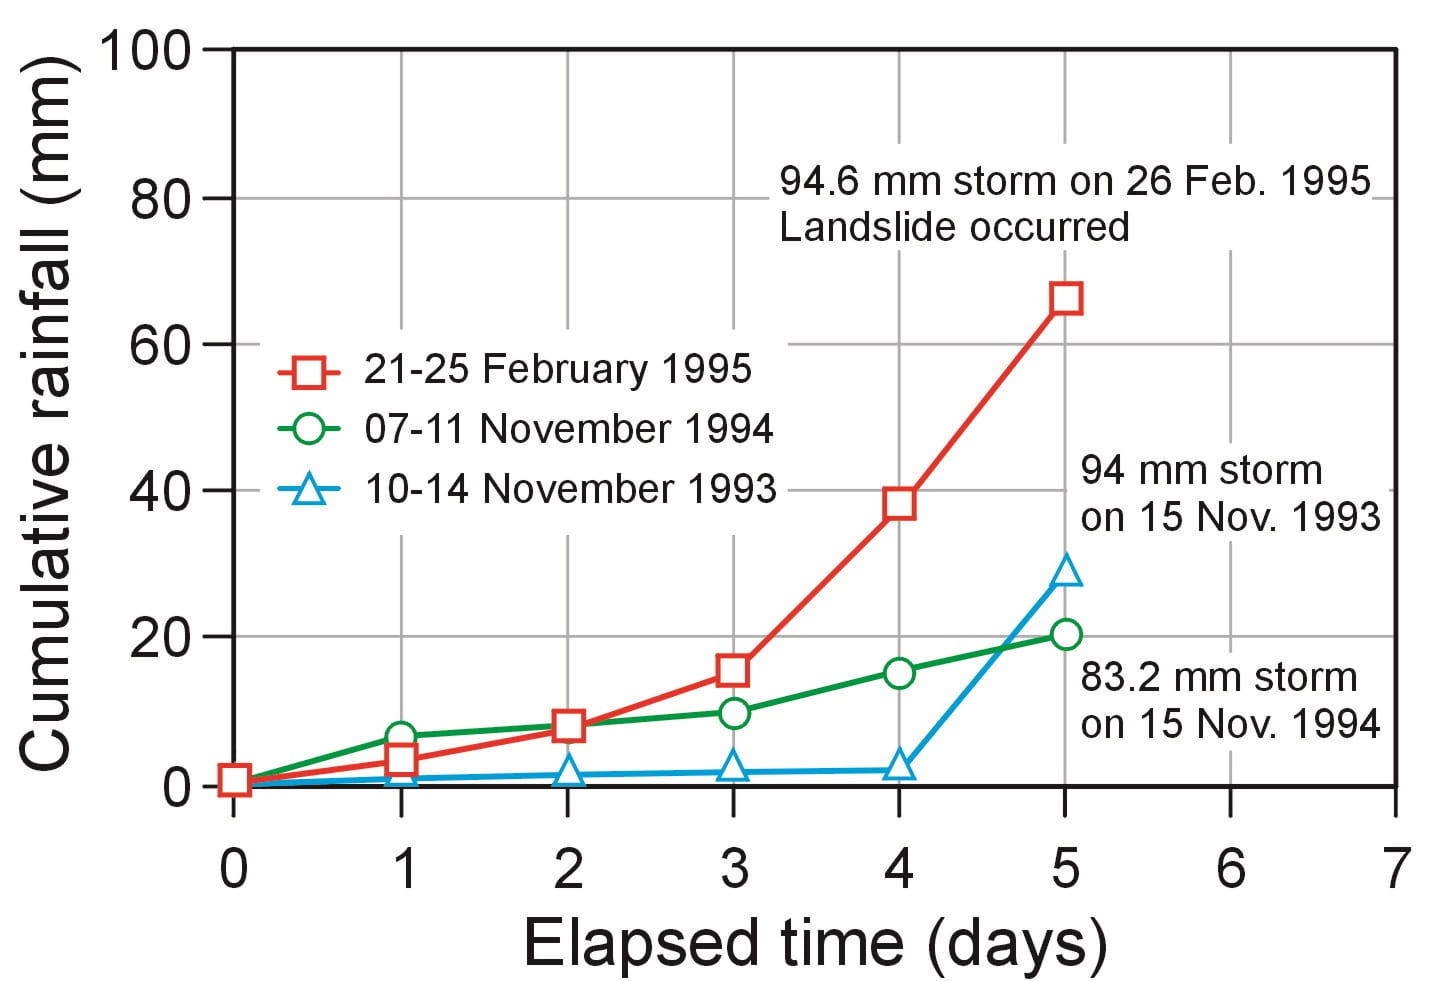 Antecedent rainfall and slope failure in Singapore, Rahardjo et al, 2001